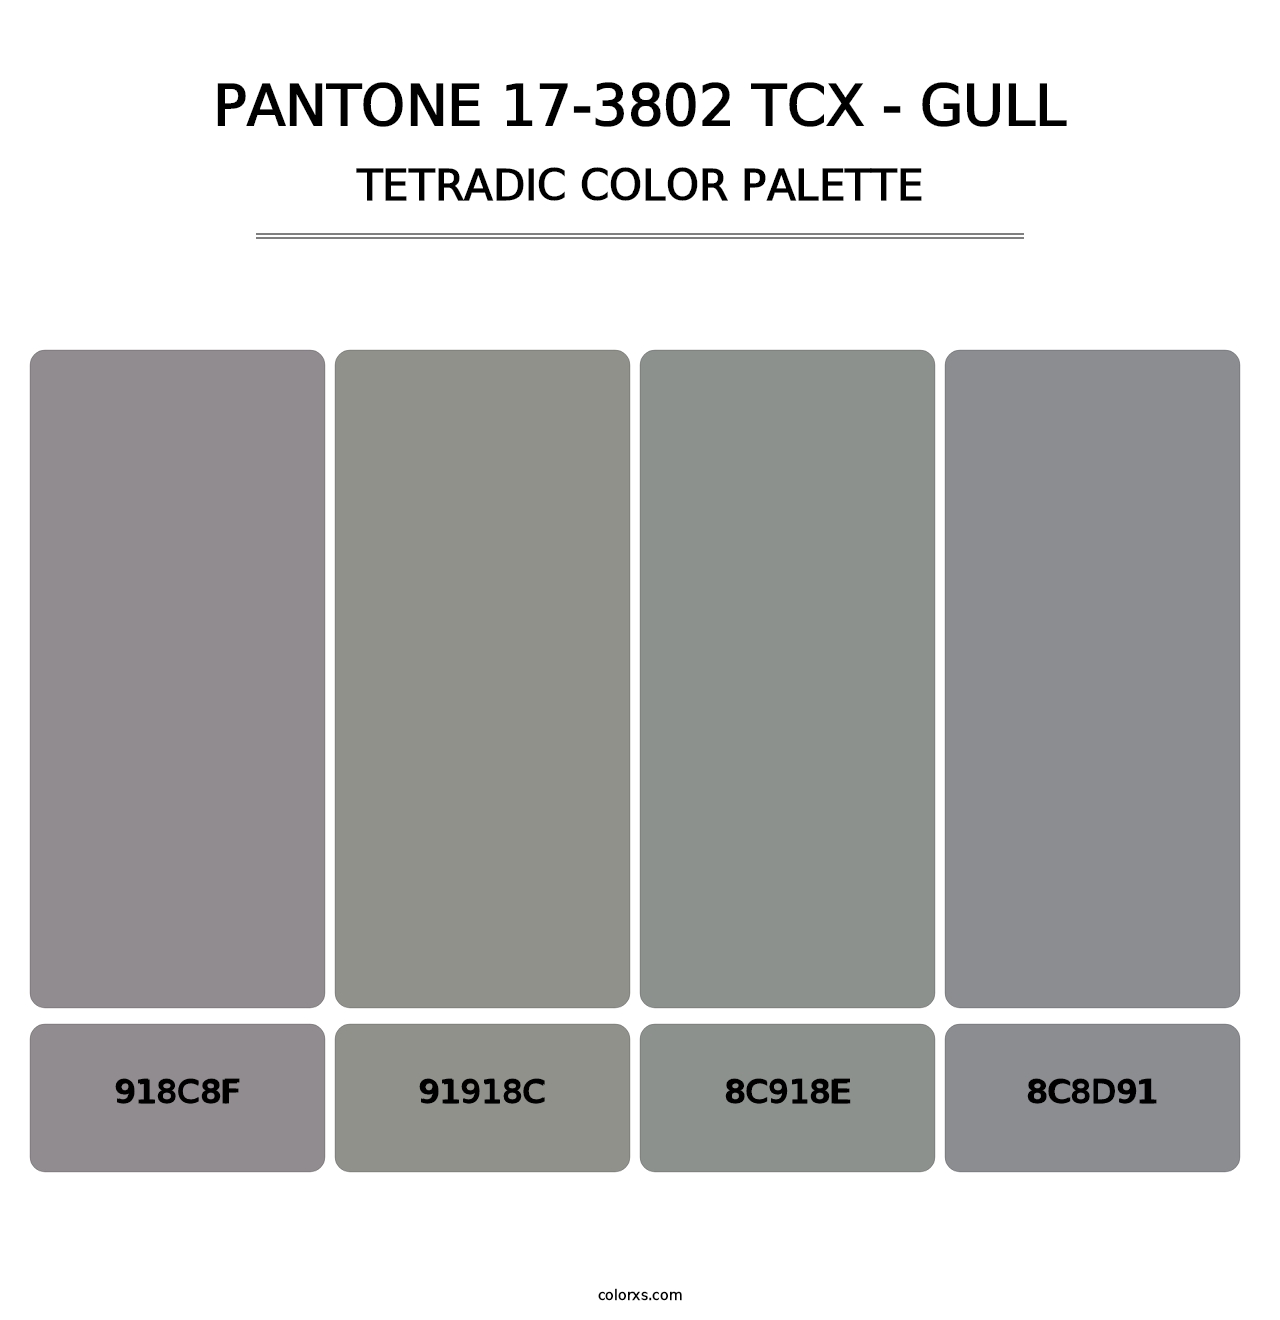 PANTONE 17-3802 TCX - Gull - Tetradic Color Palette